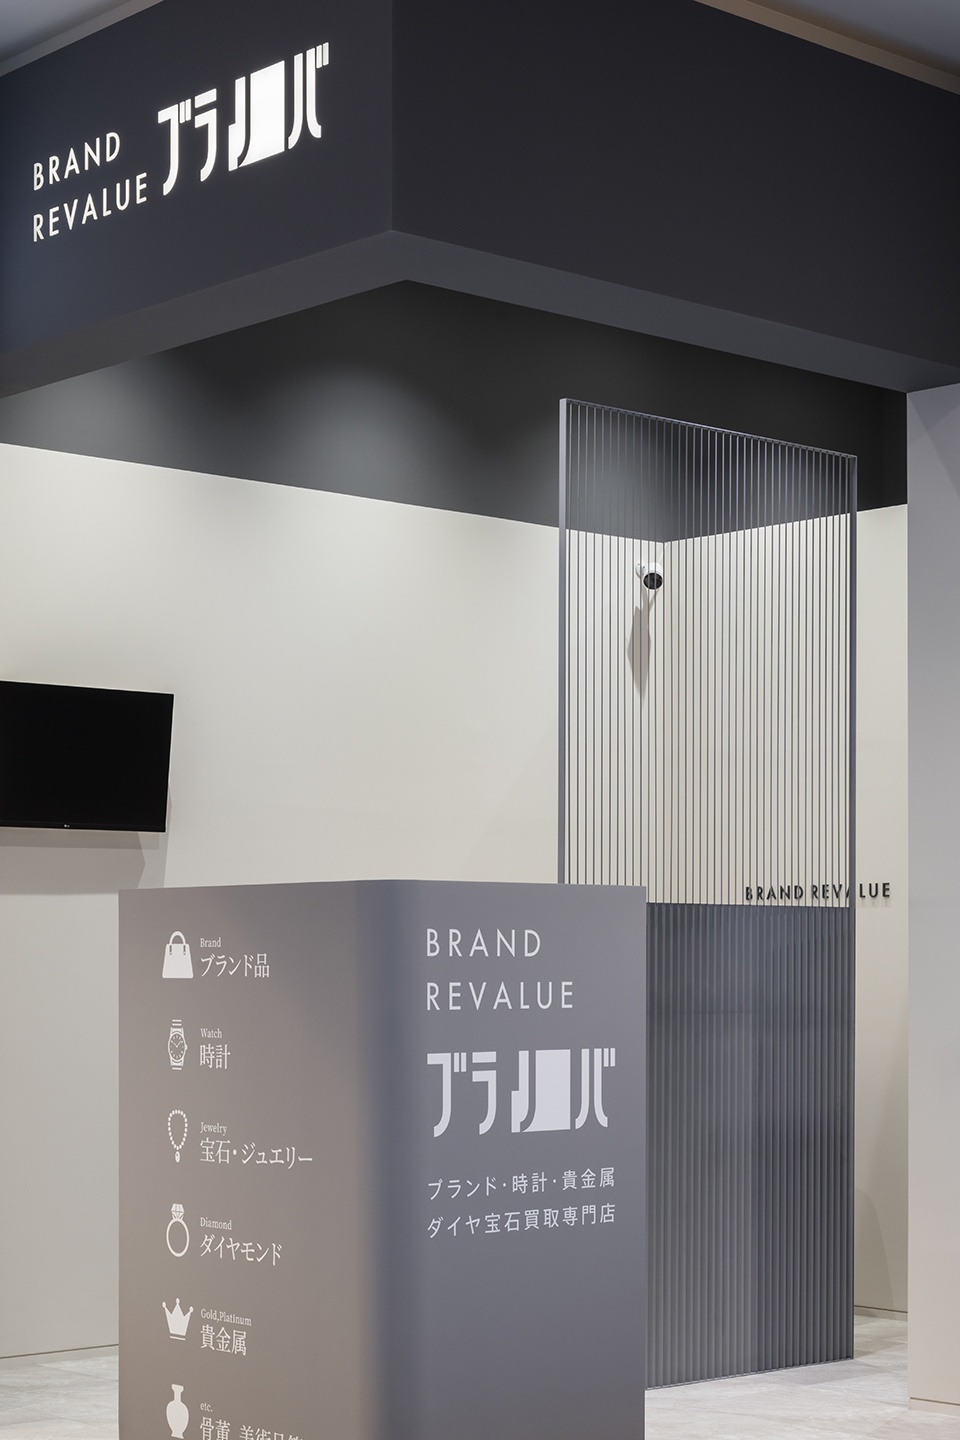 brand revalue寄售商店,大阪 / shimpei oda architect office